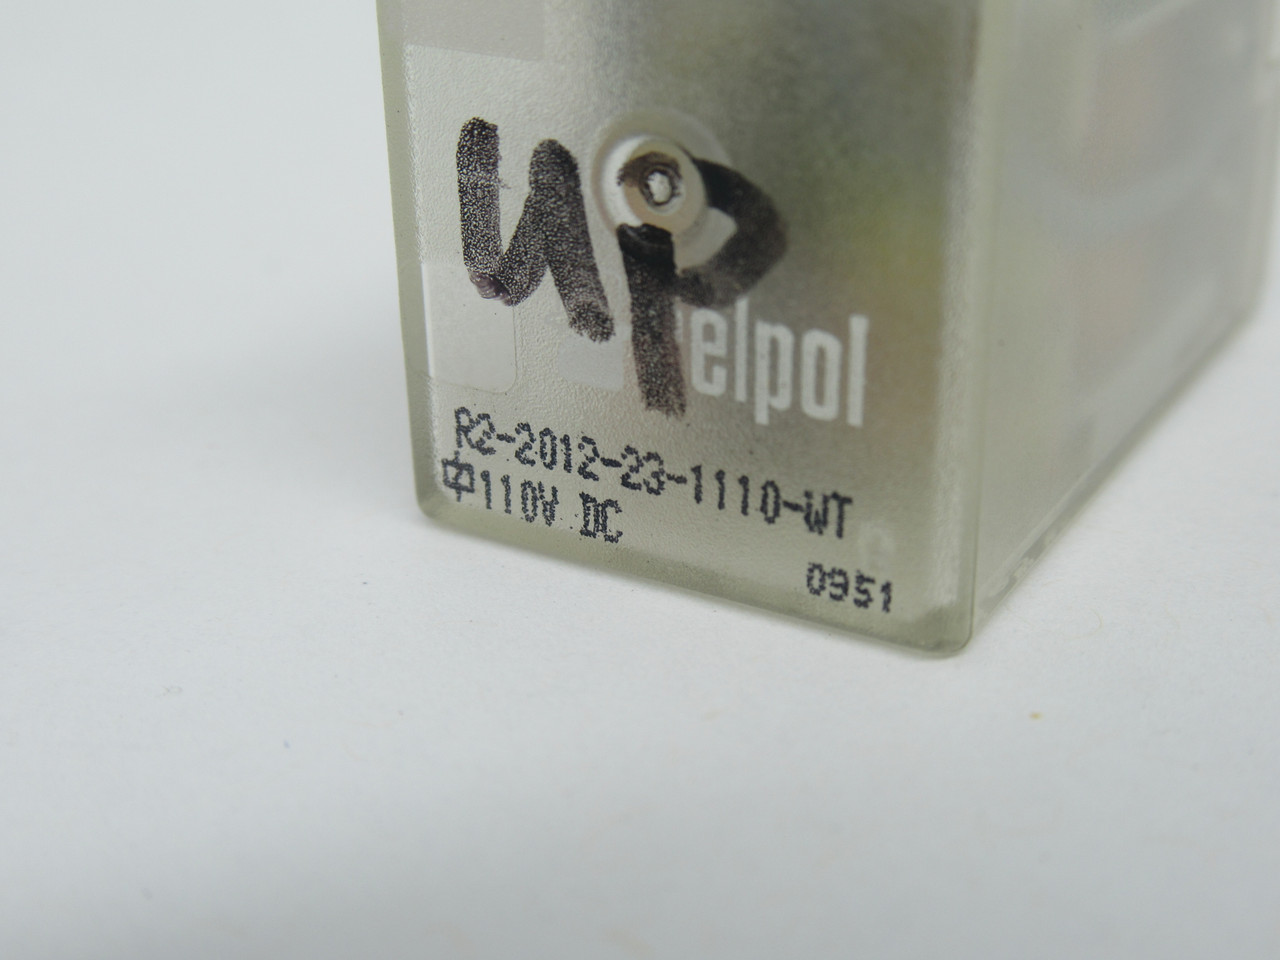 Relpol R2-2012-23-1110-WT Plug-In Relay 110VDC 12A 8-Blade USED